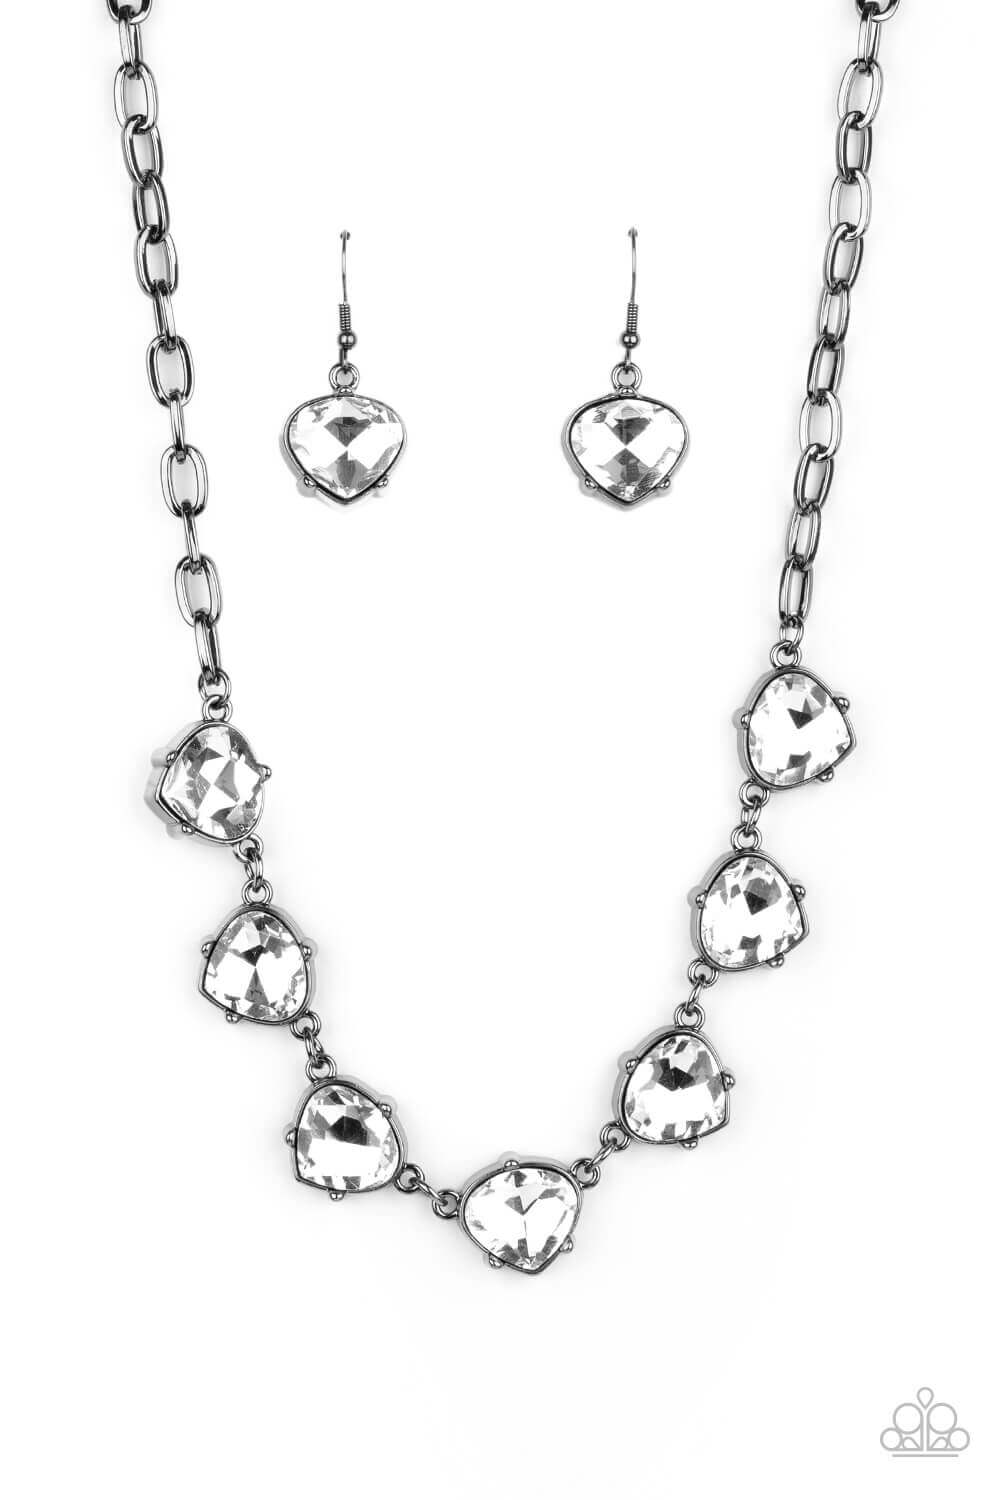 Star Quality Sparkle Black Necklace Set Life Of The Party Exclusive Dec 2020 - Princess Glam Shop